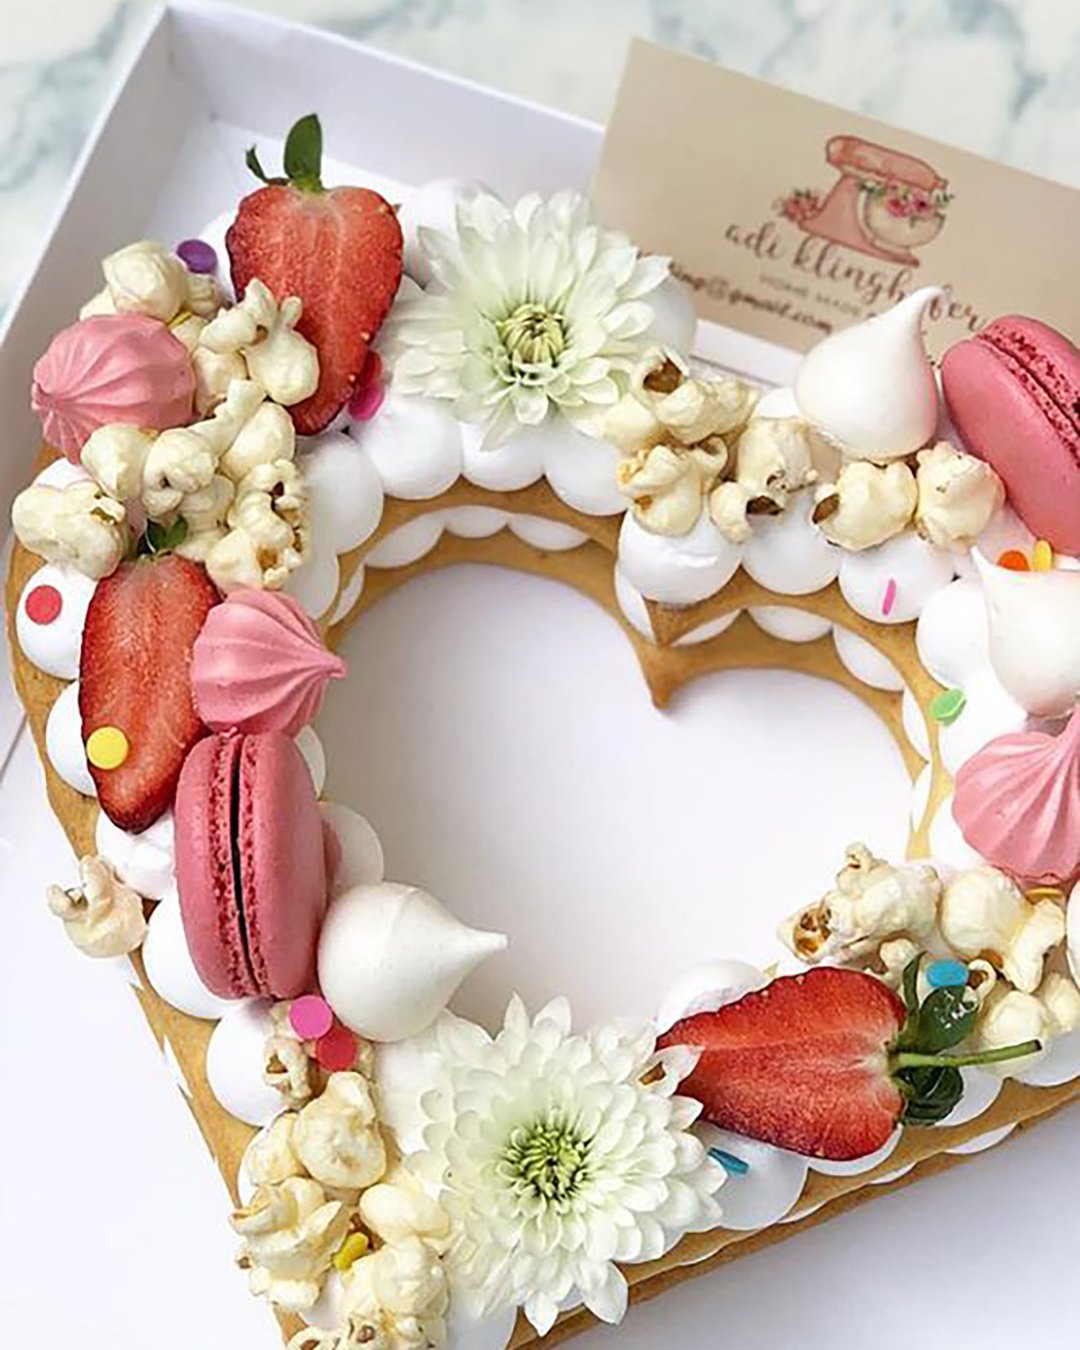 non traditional wedding dessert ideas tired heart shaped cake flowers and strawberries cake adikosh